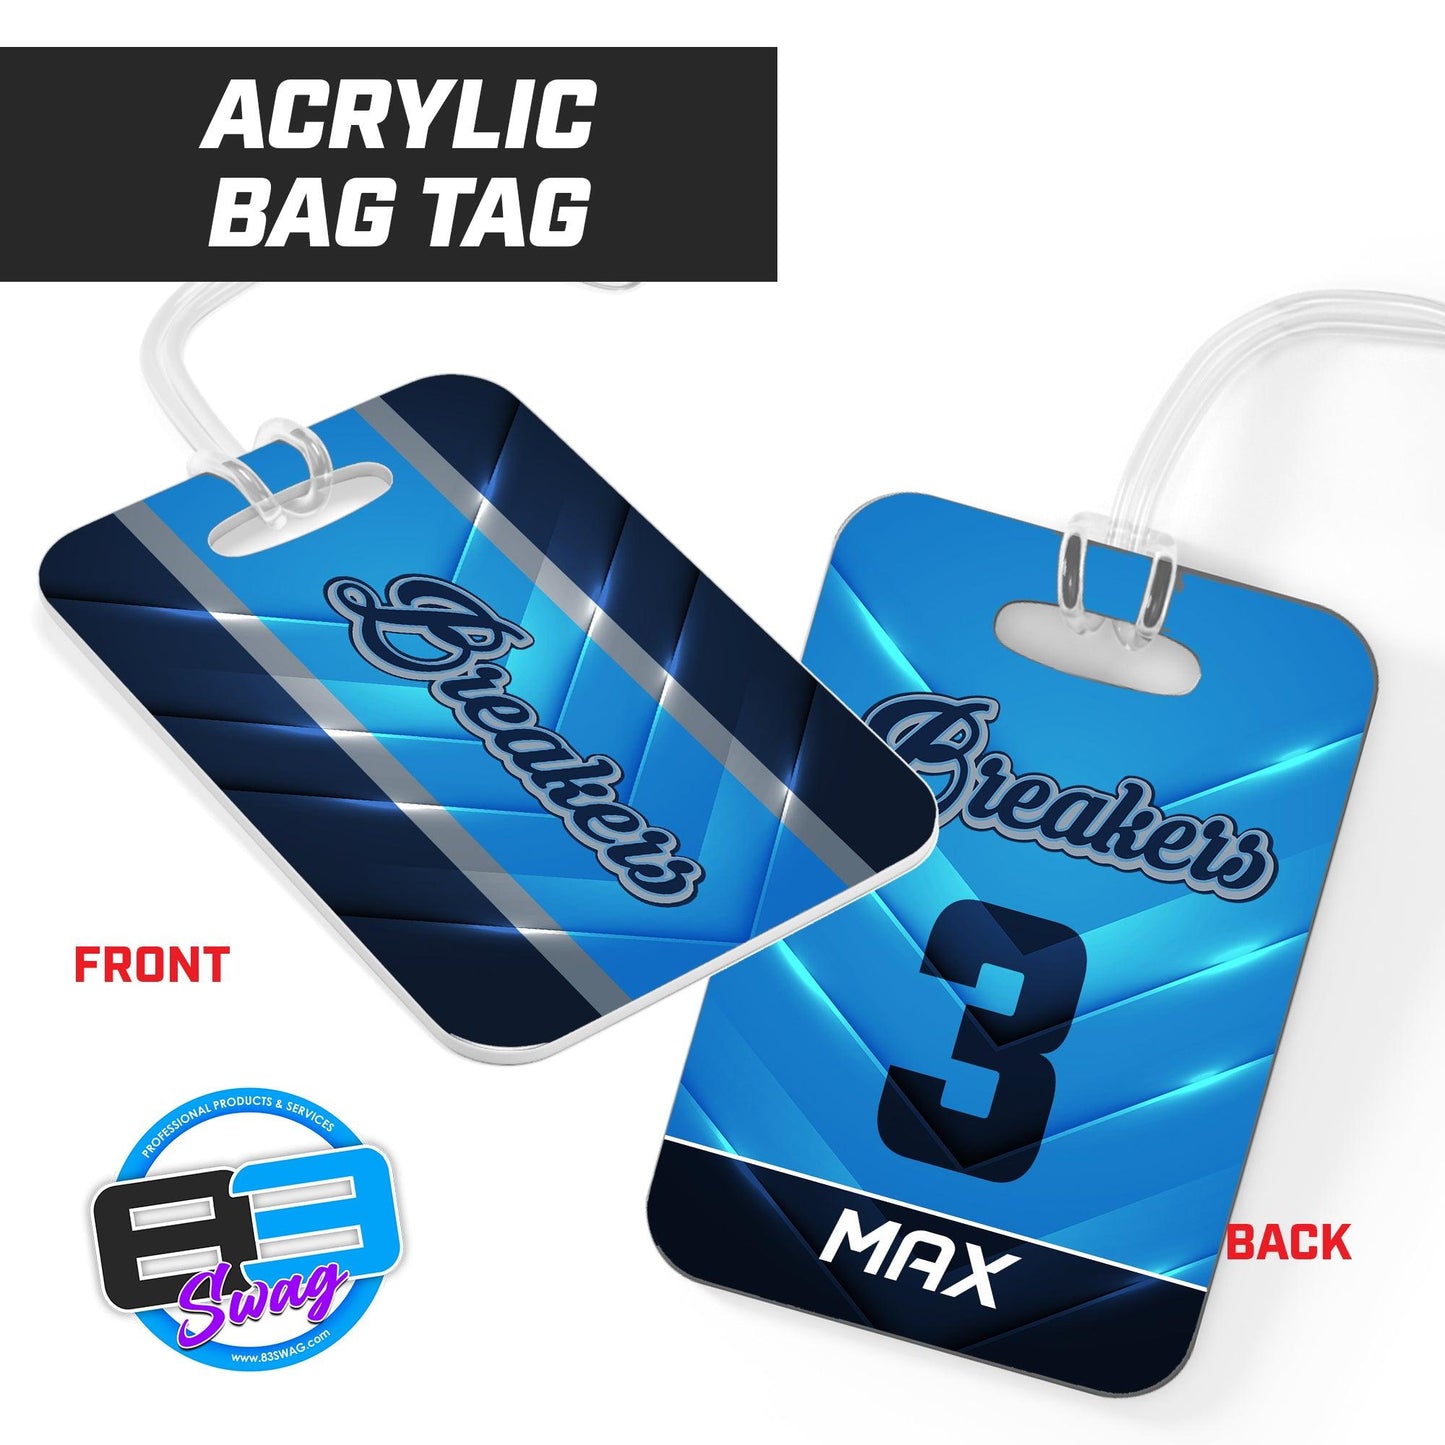 Breakers - Hard Acrylic Bag Tag